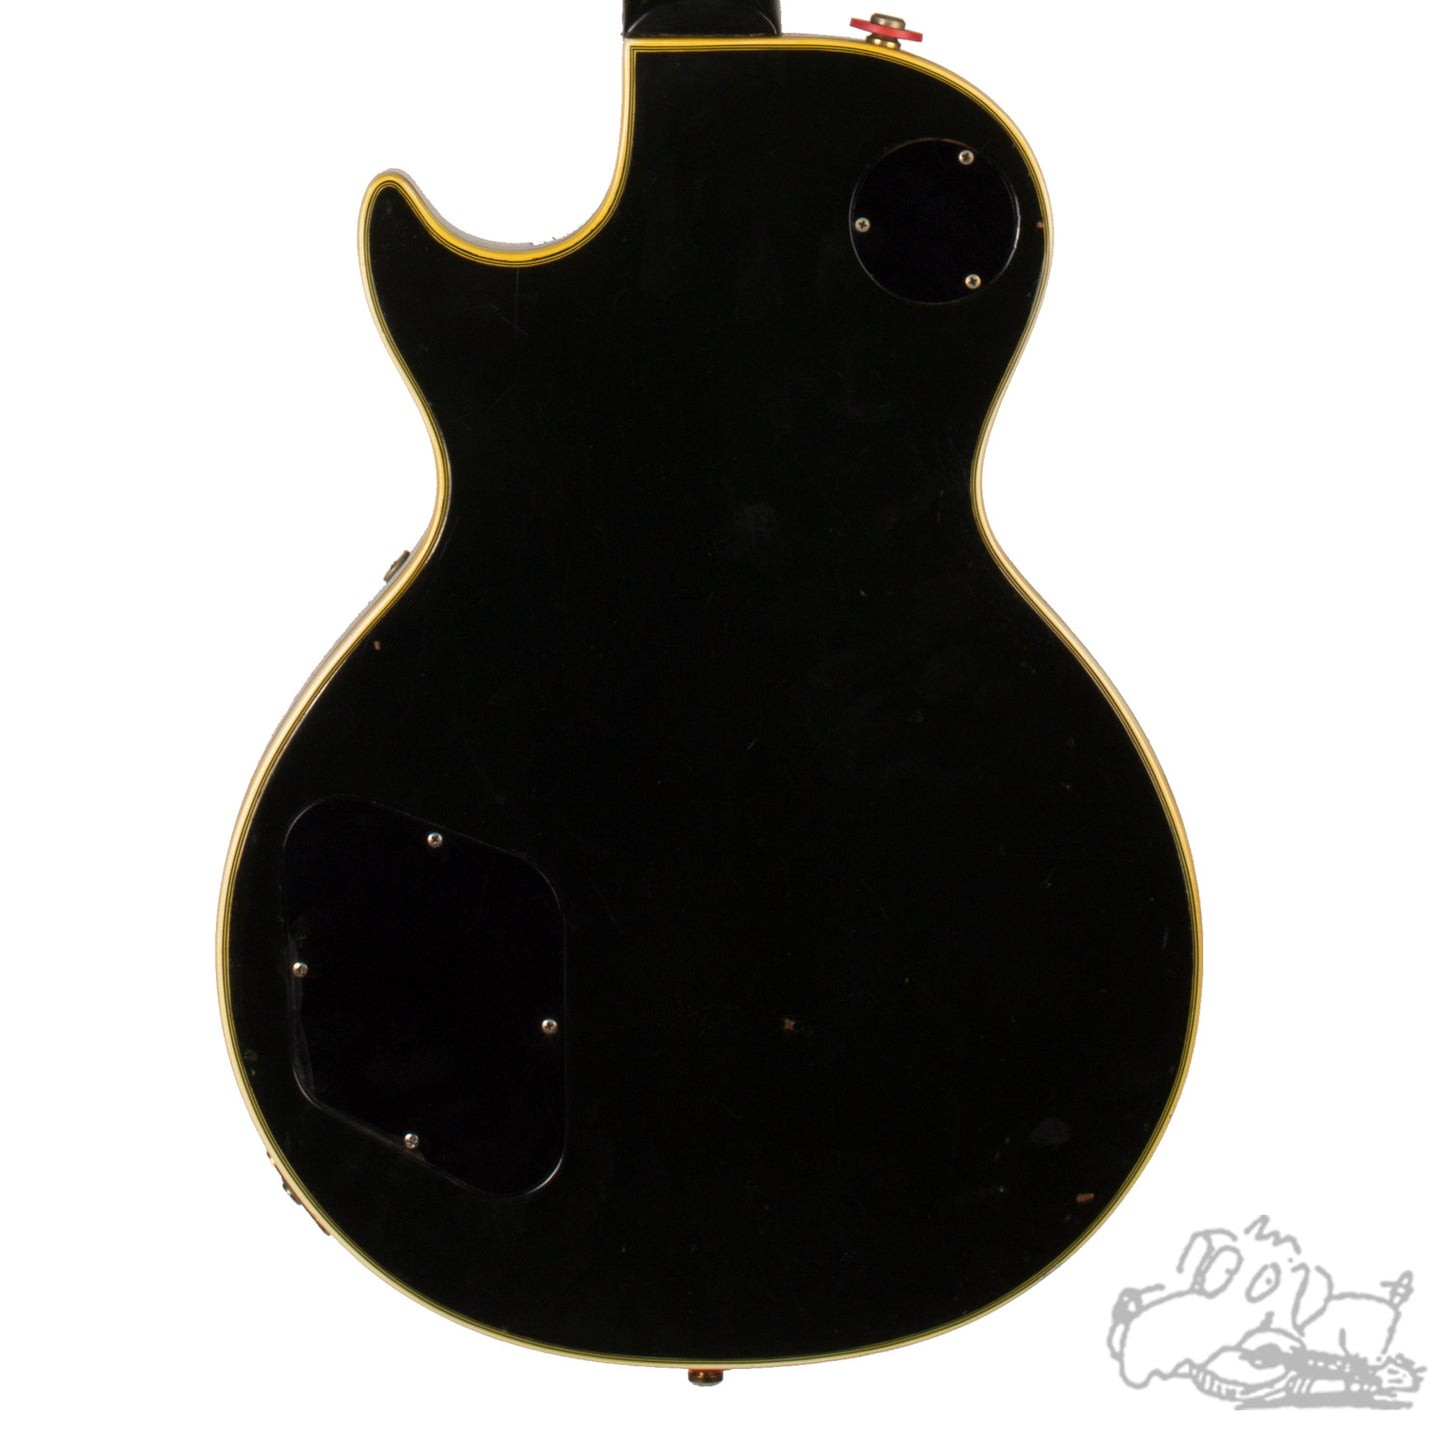 1972 Gibson Les Paul Custom